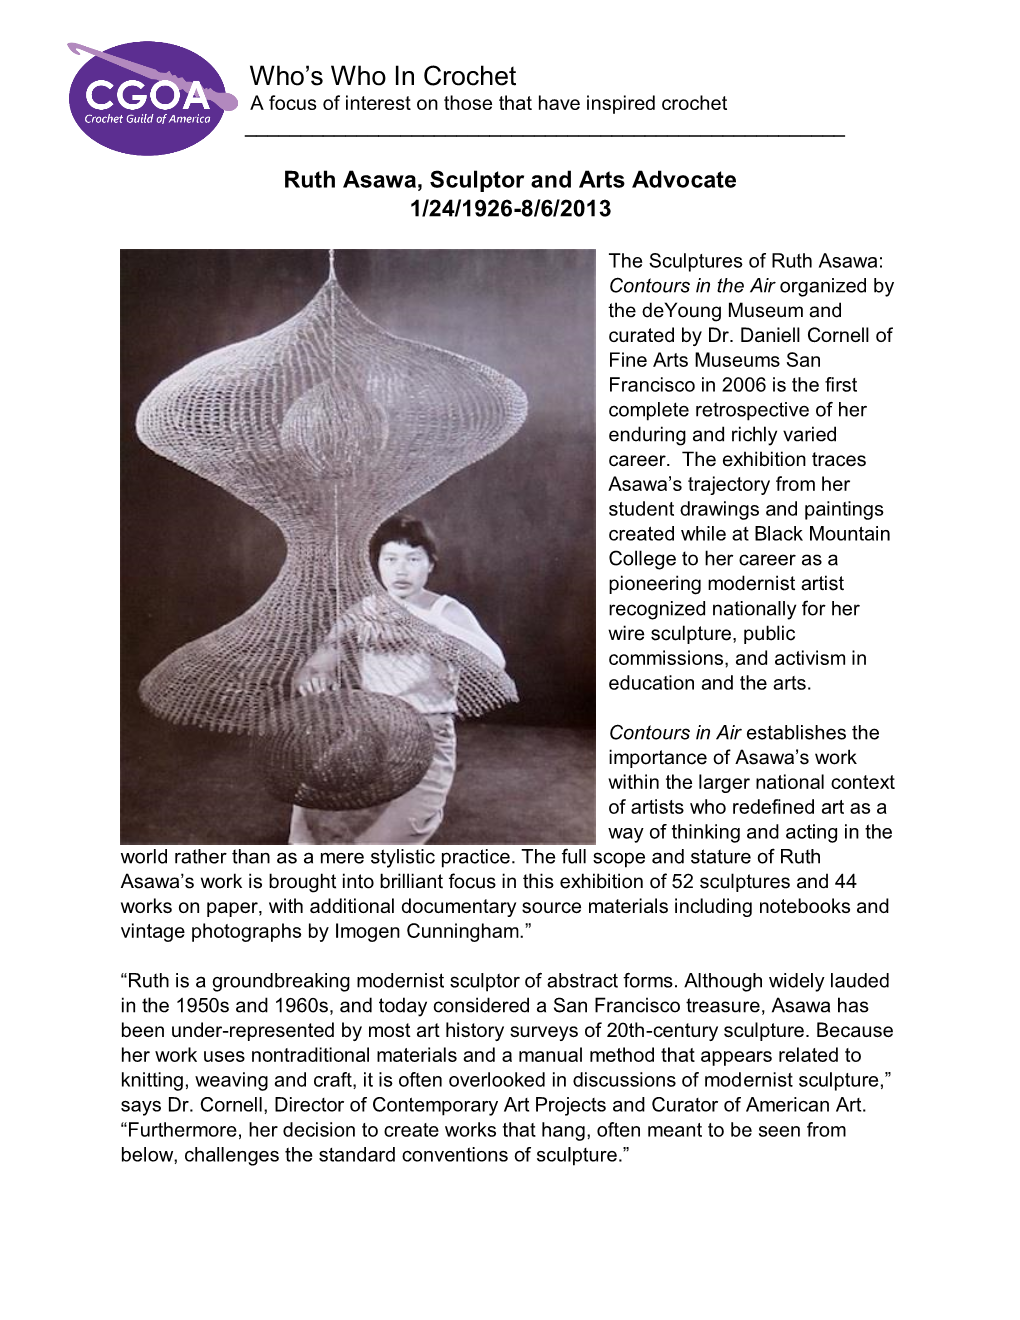 Ruth Asawa, Sculptor and Arts Advocate 1/24/1926-8/6/2013